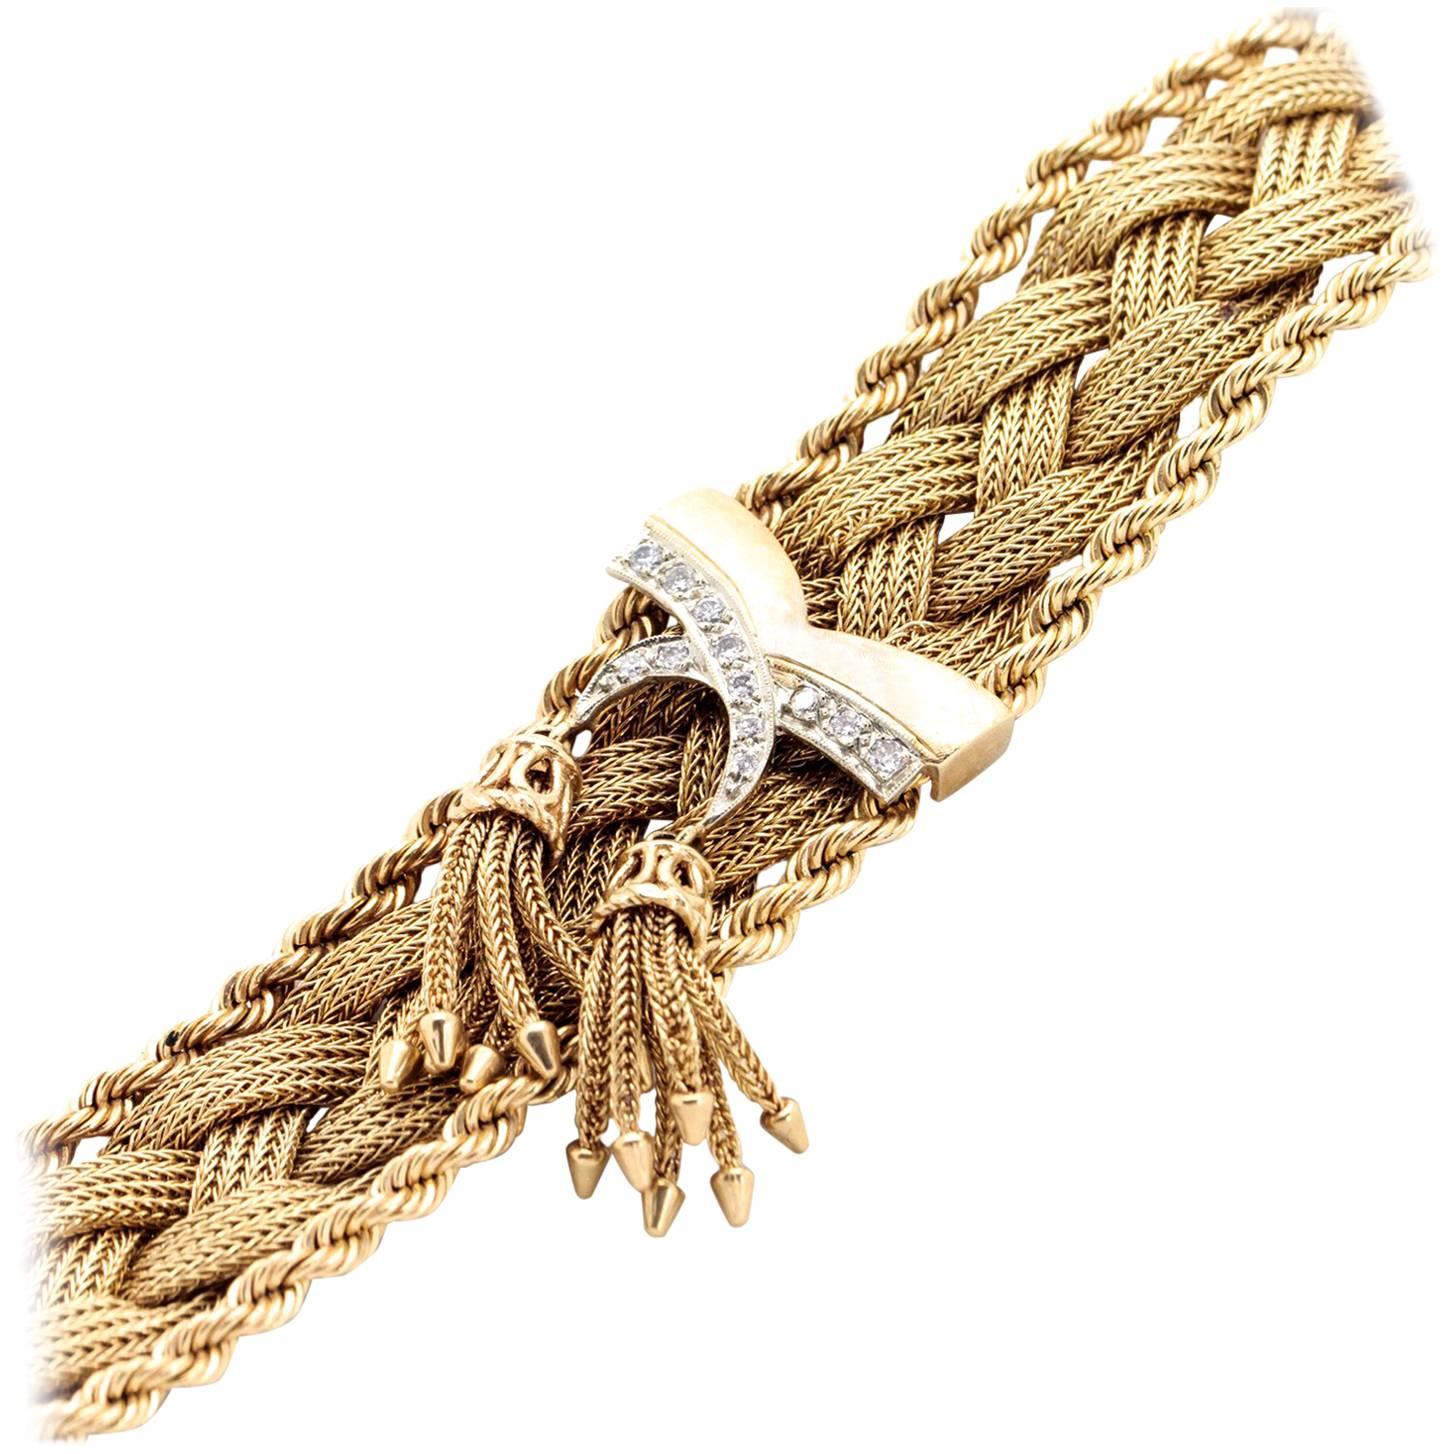 Vintage 1940s Braided Gold and Tassel bracelet with Diamonds, Handmade Bracelet For Sale